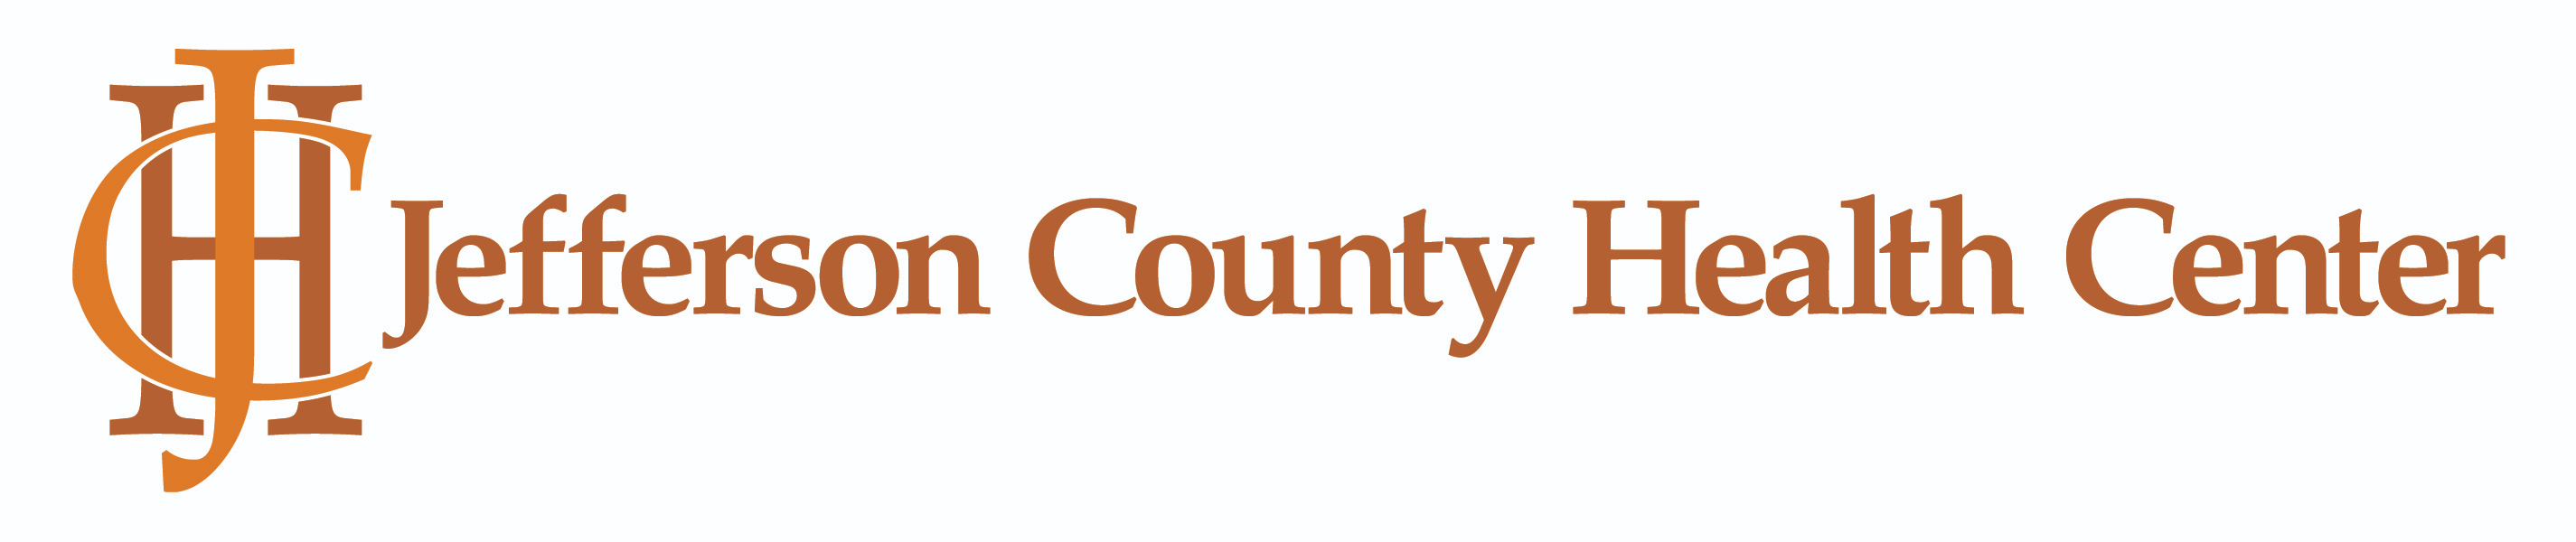 Jefferson County Health Center Company Logo